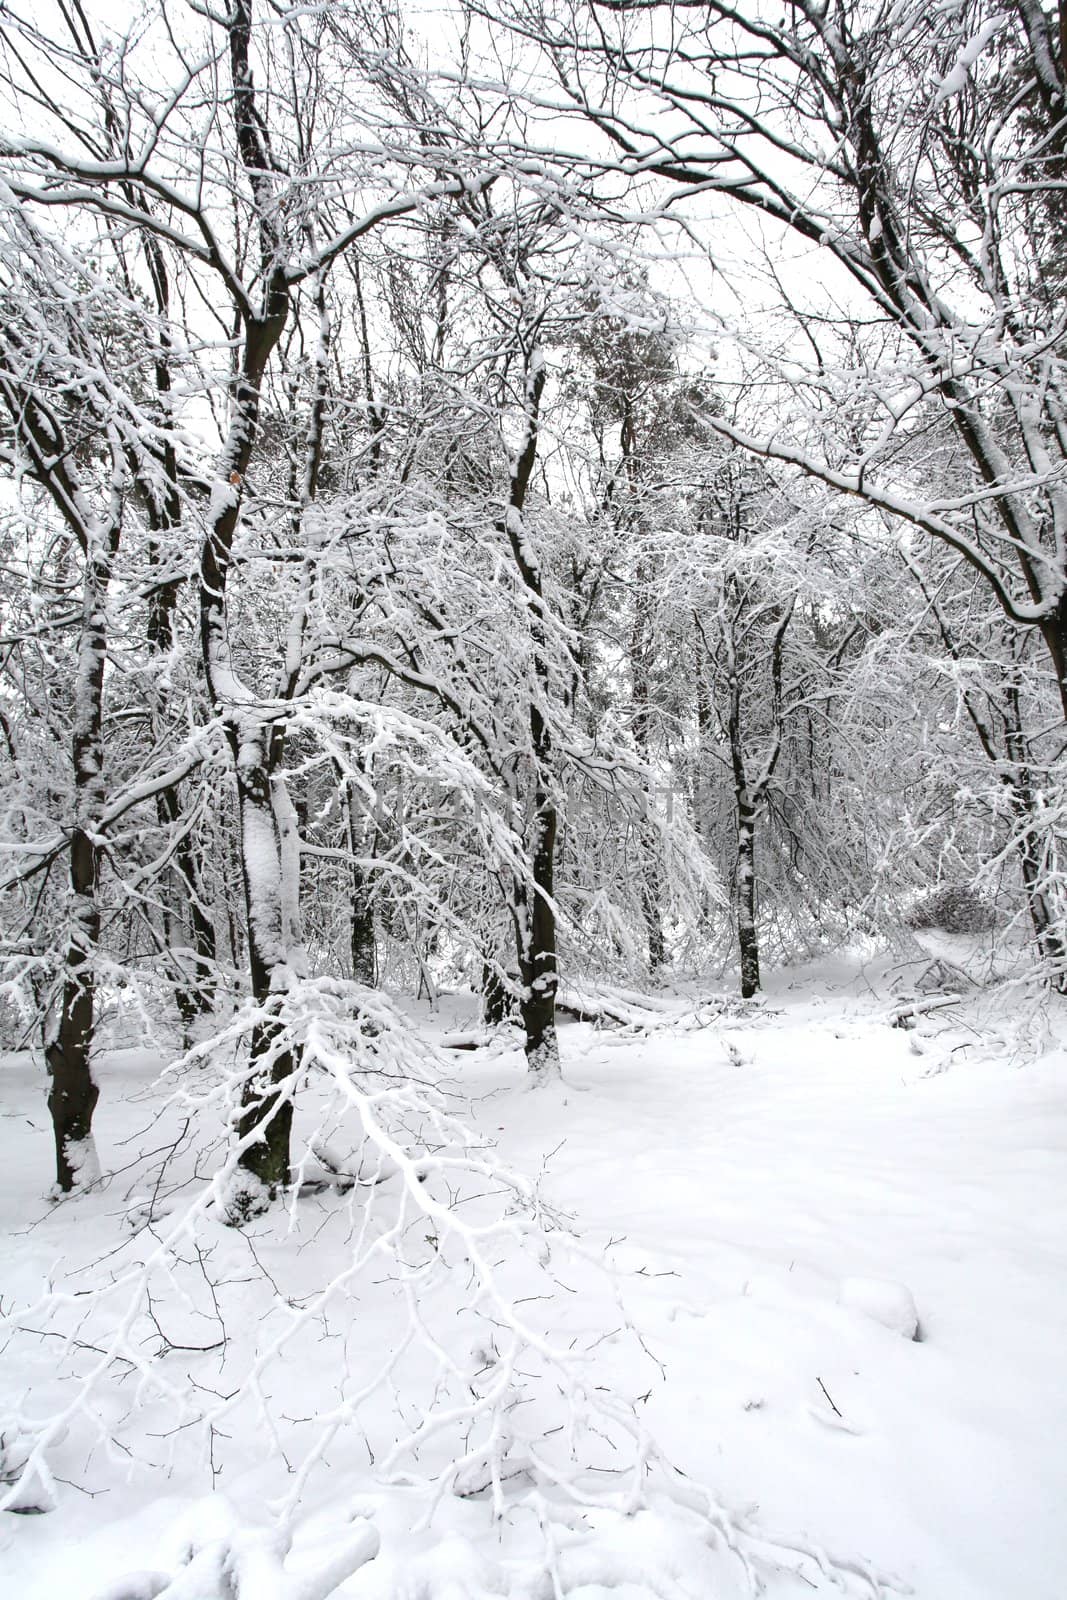 snow covered barren trees in winter UK